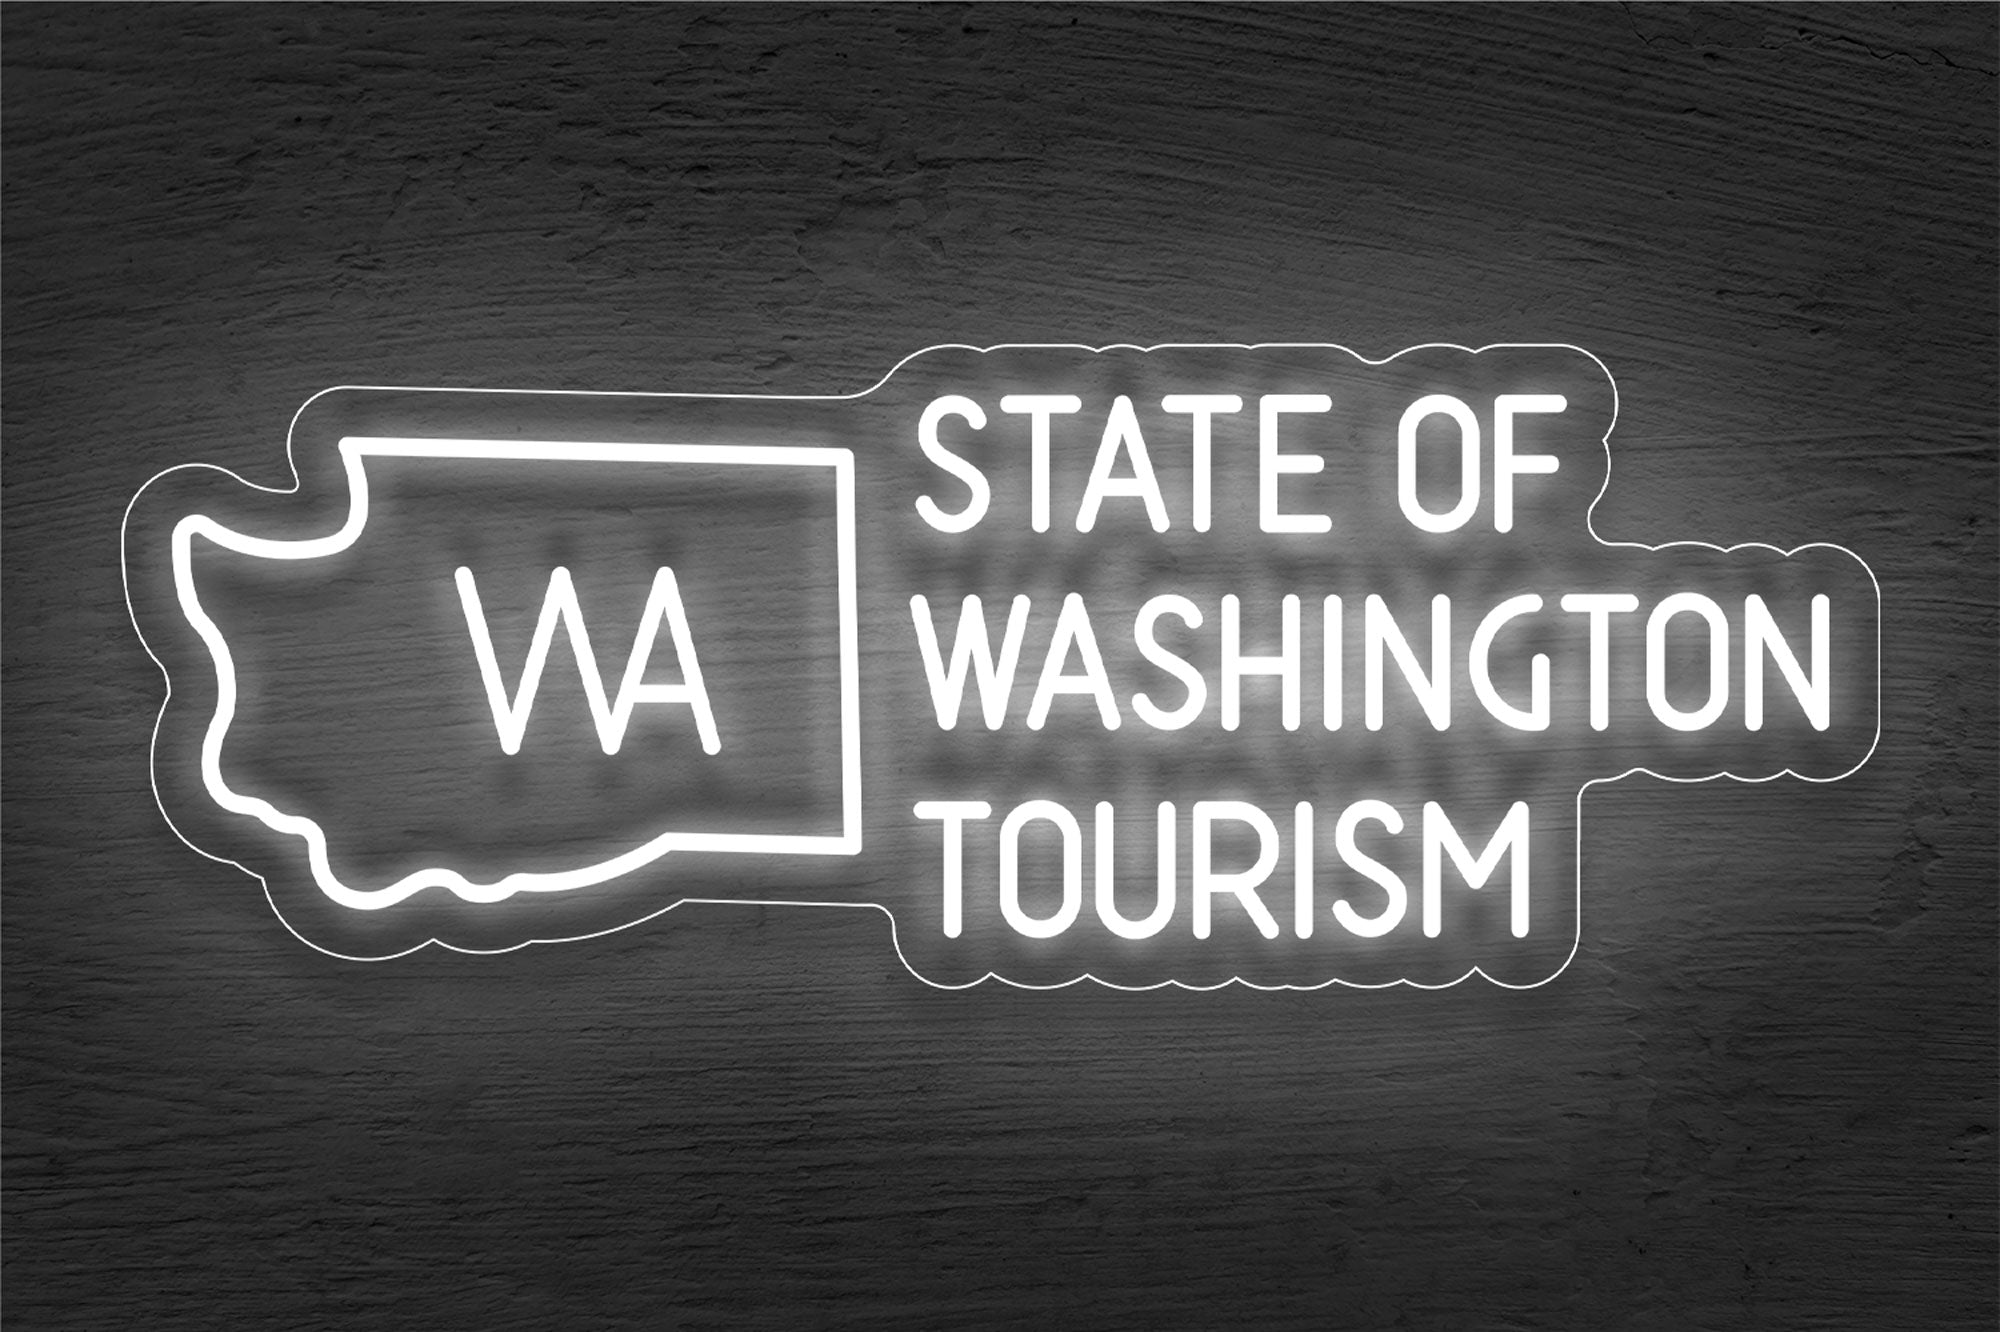 Map and WA State of Washington Tourism LED Neon Sign